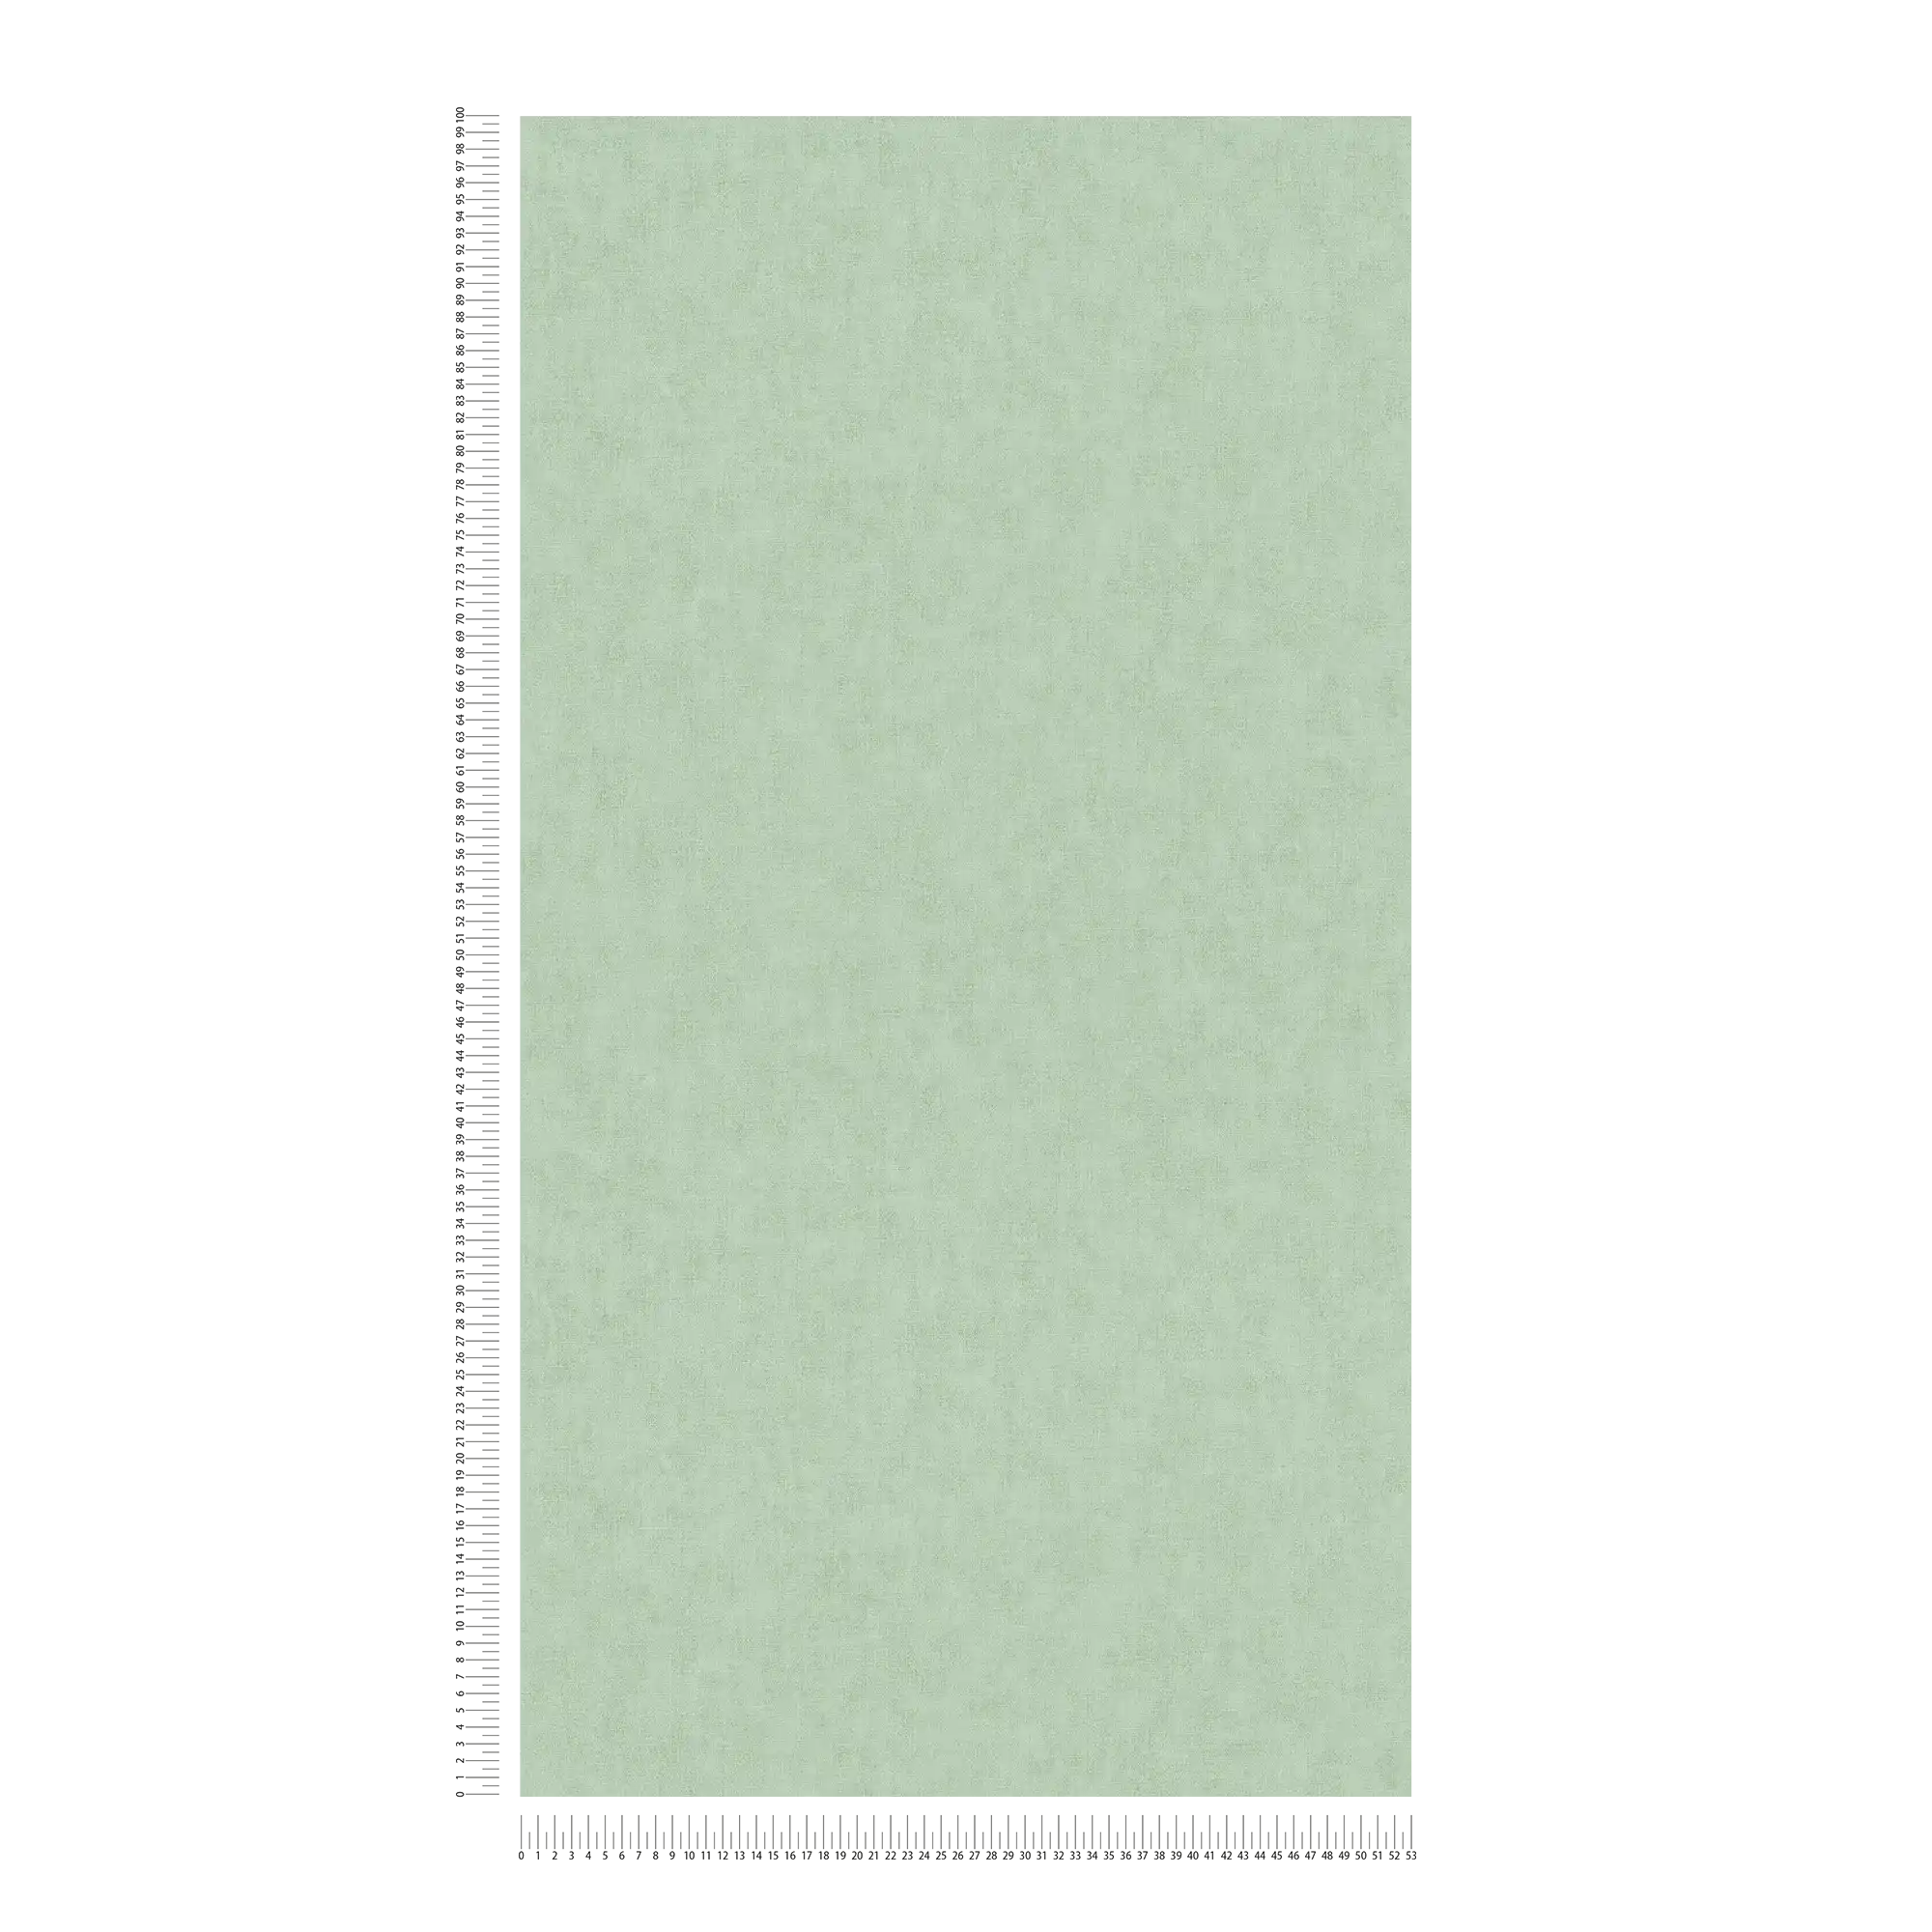             Papier peint uni, aspect lin & style scandinave - Vert
        